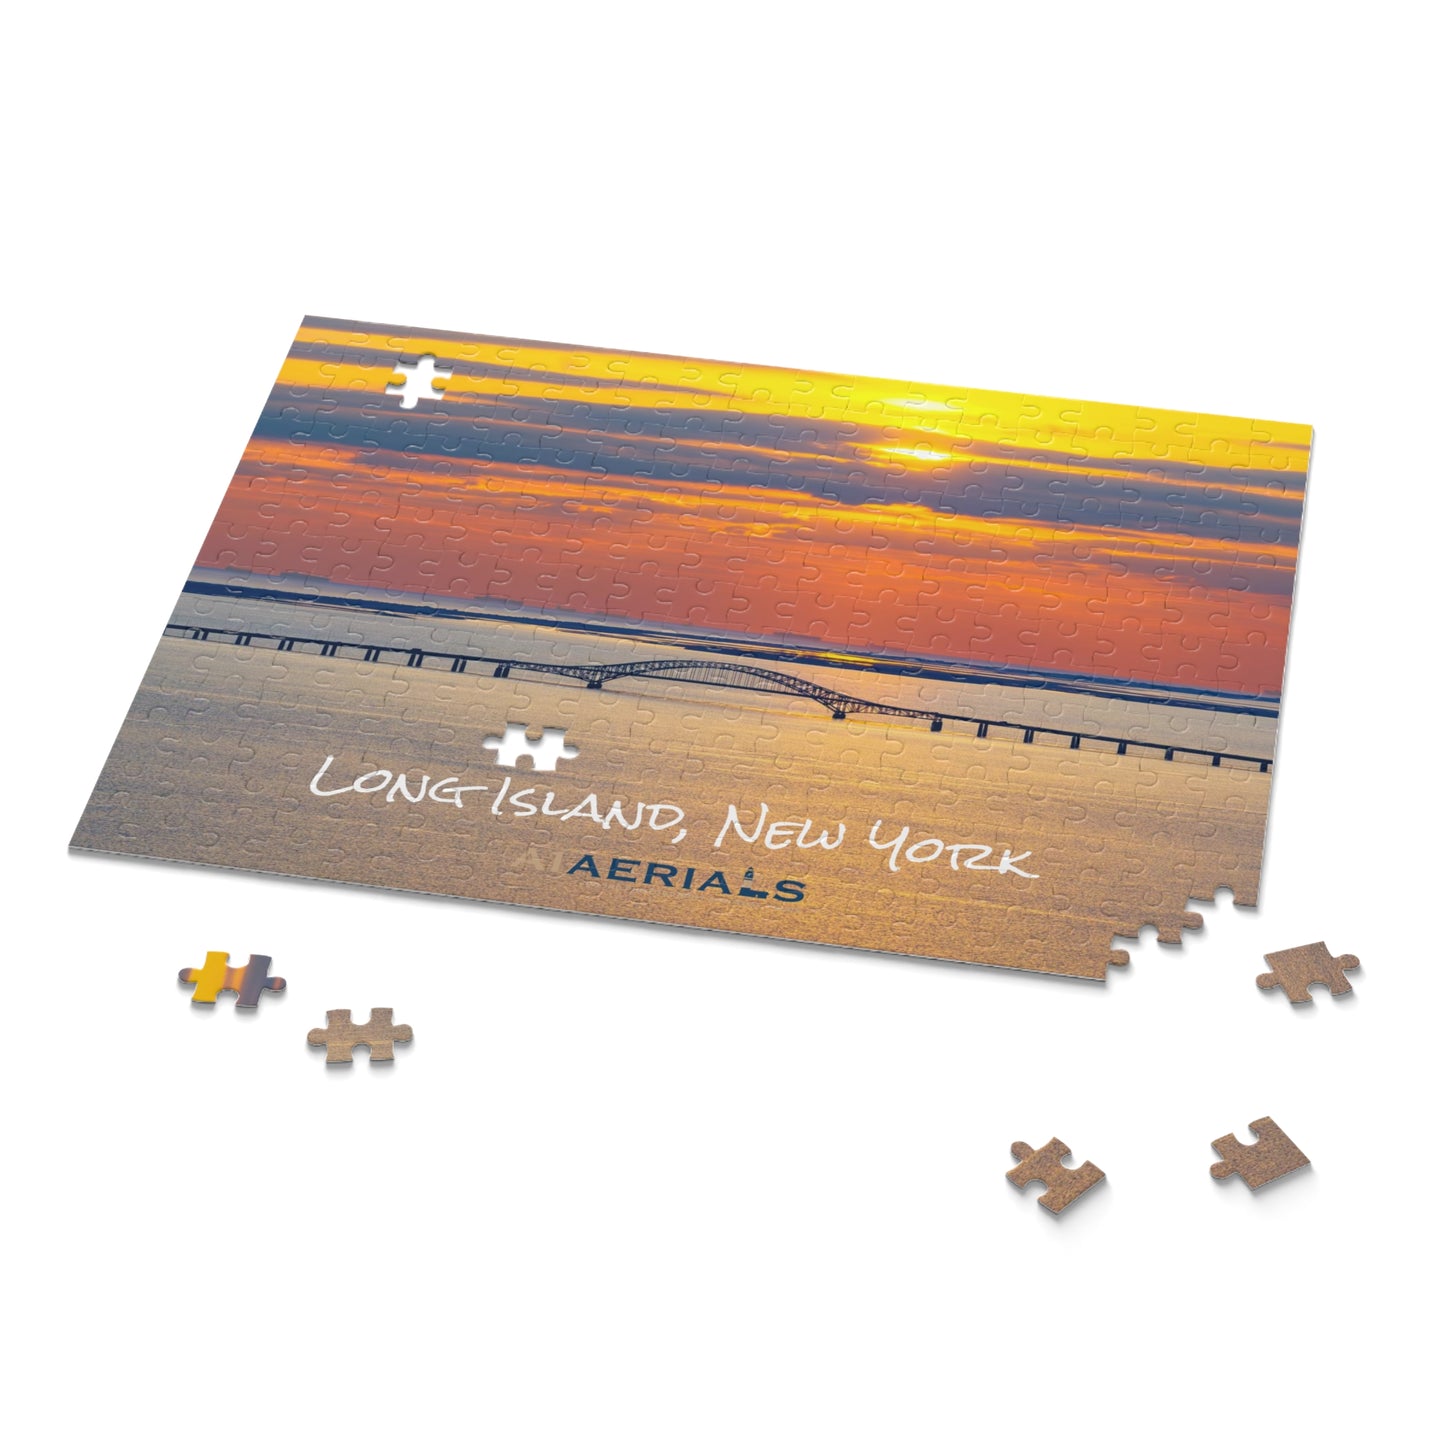 Puzzle in Box (252-Piece) - Great South Bay Bridge